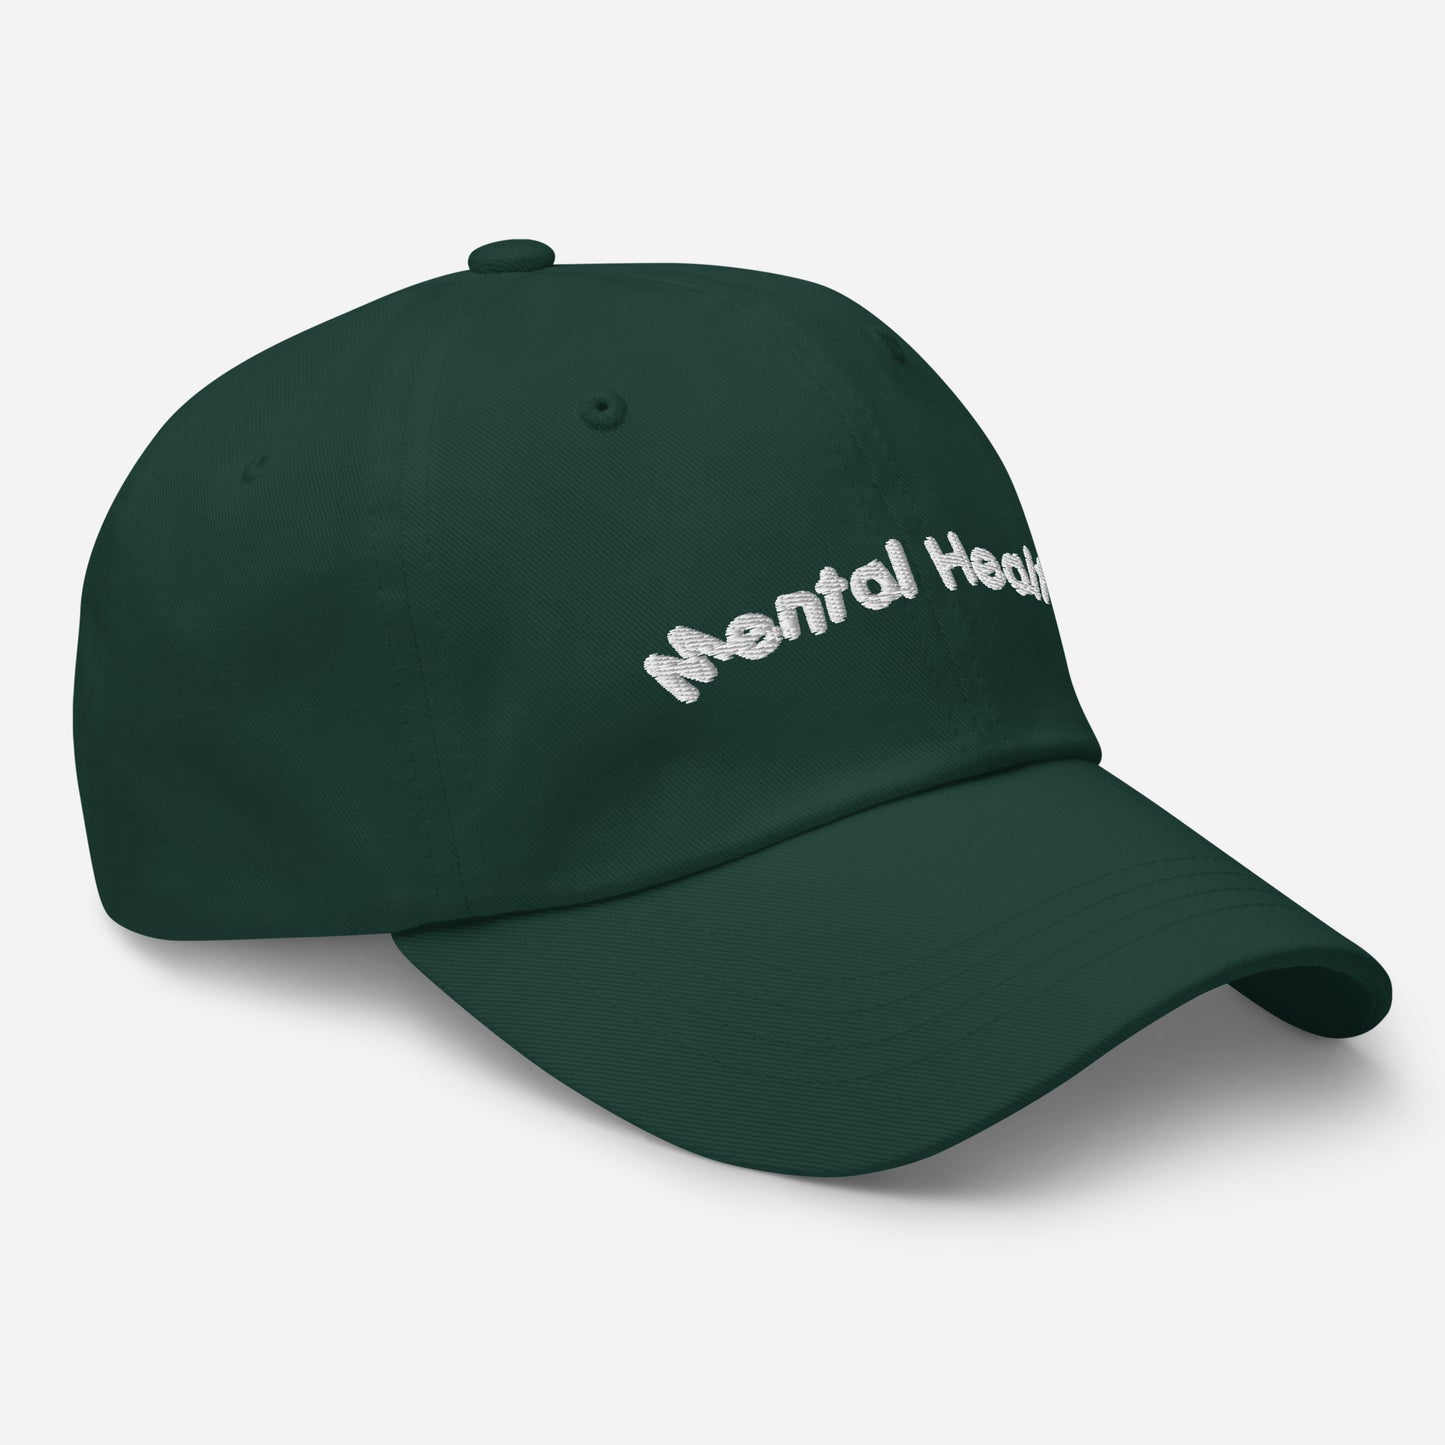 "Mental Health" Dad hat